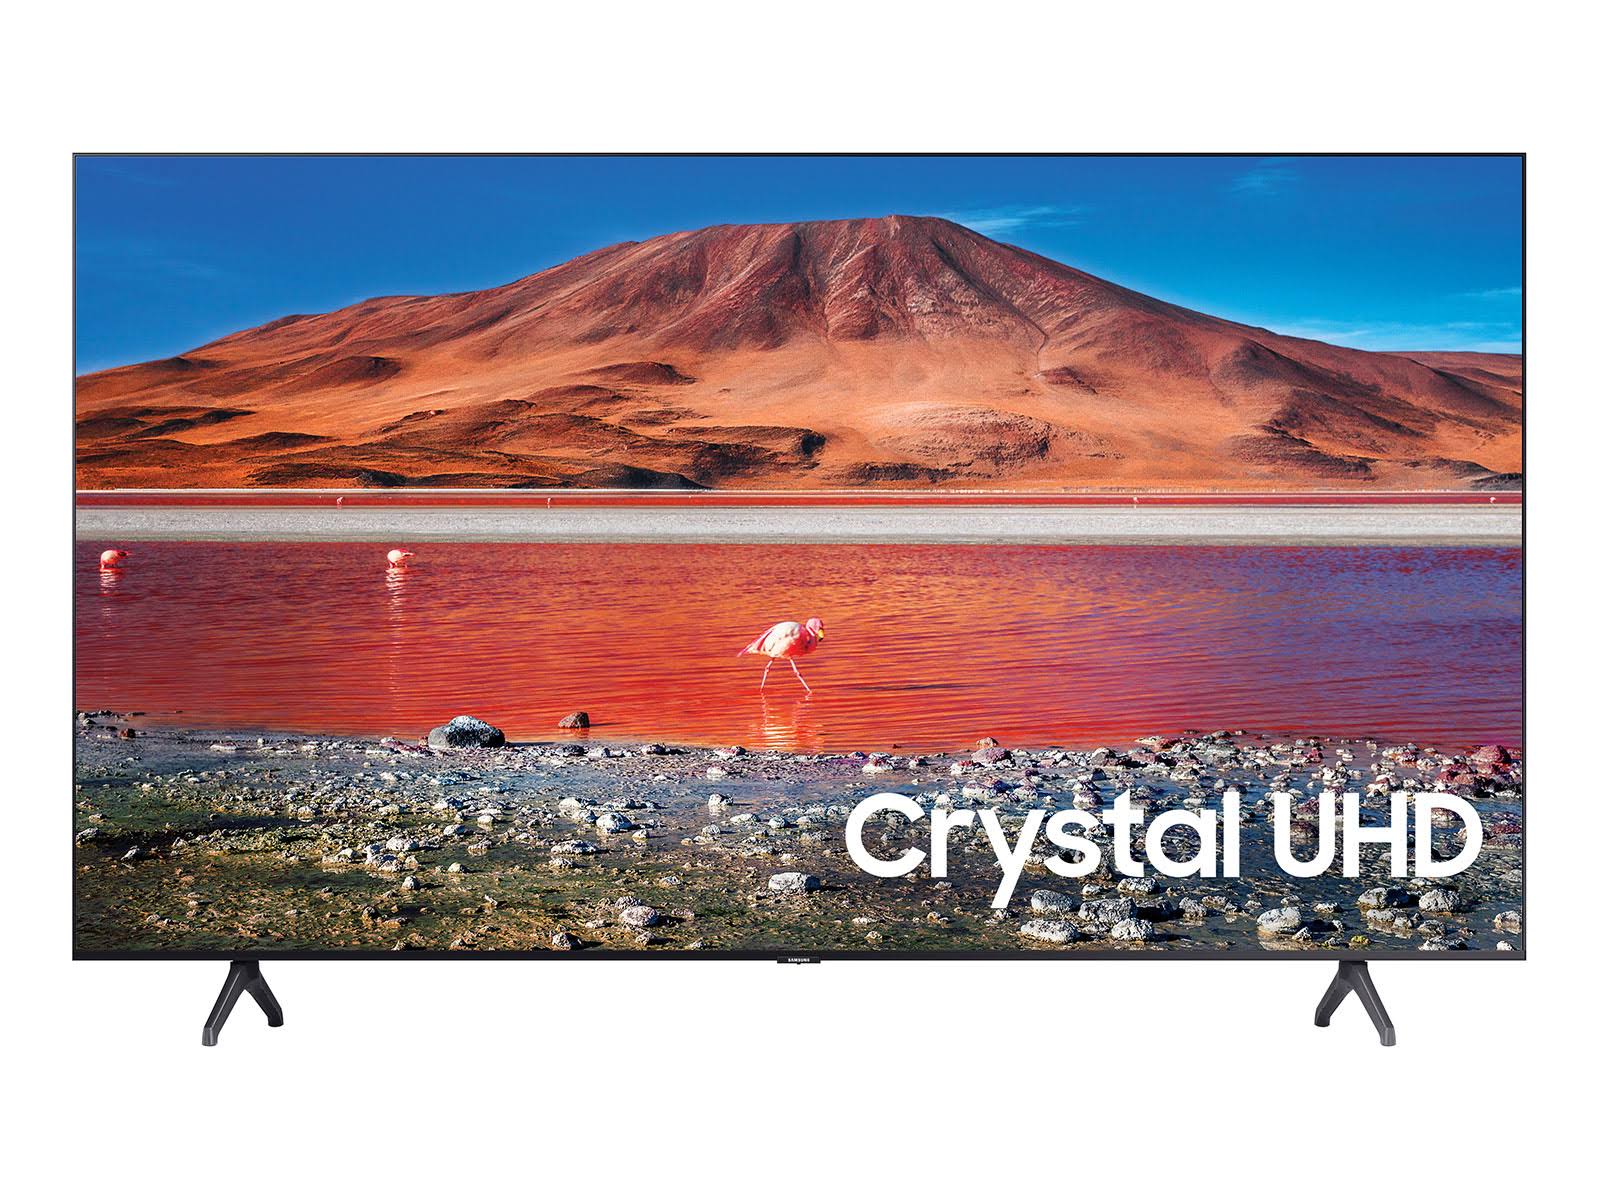 Samsung UN43TU7000FXZA/BXZA 43" Class 7 Series LED 4K UHD Smart Tizen TV